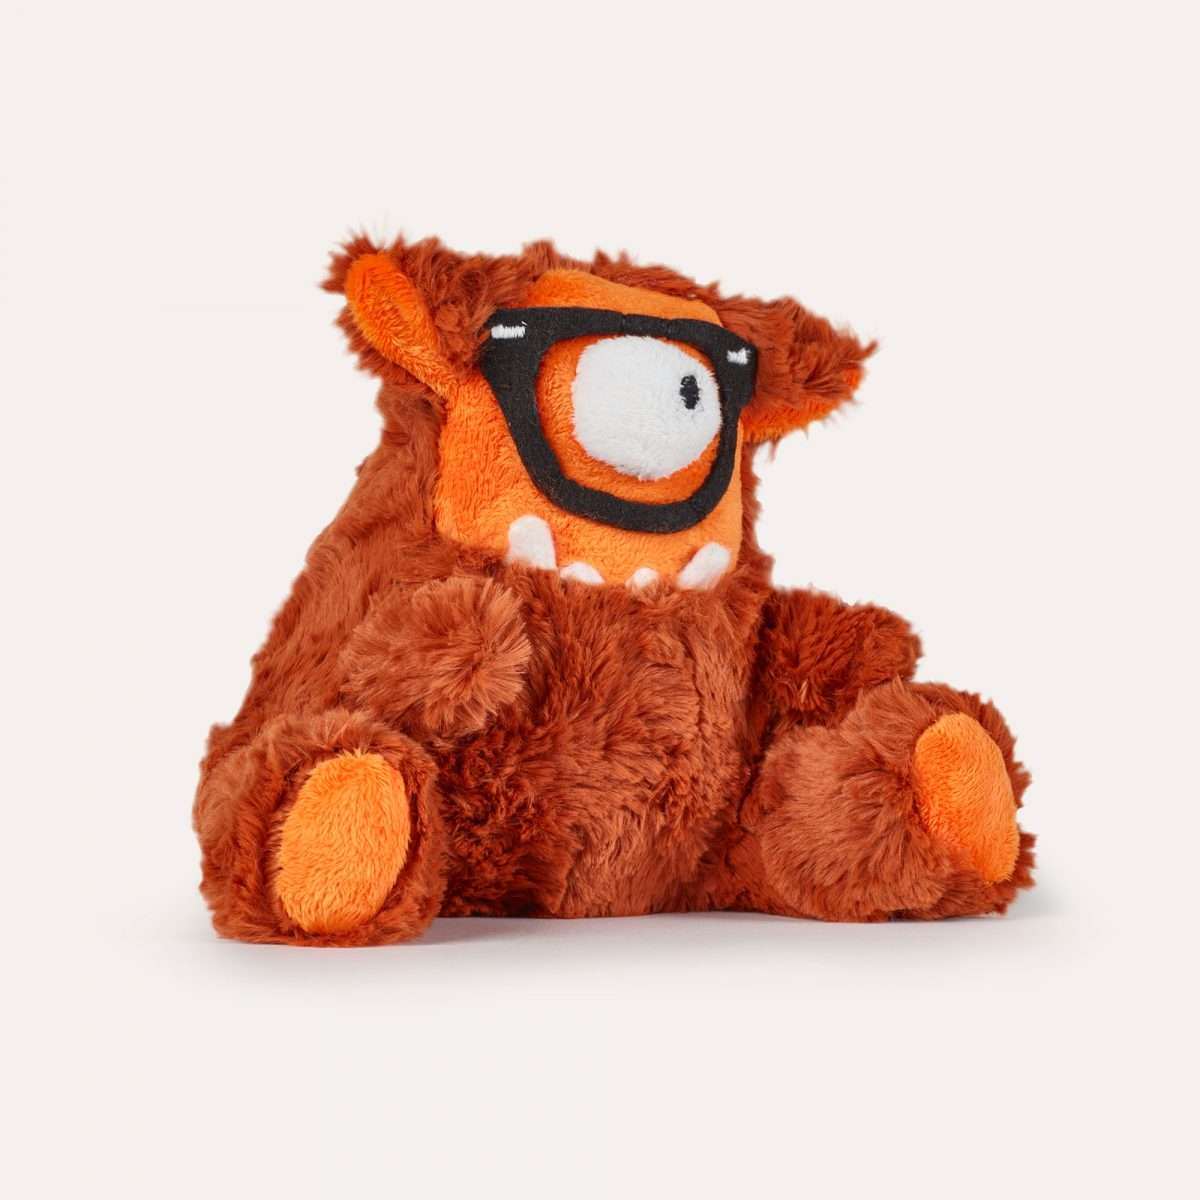 Creachums Wallis Stuffed Toy Creature